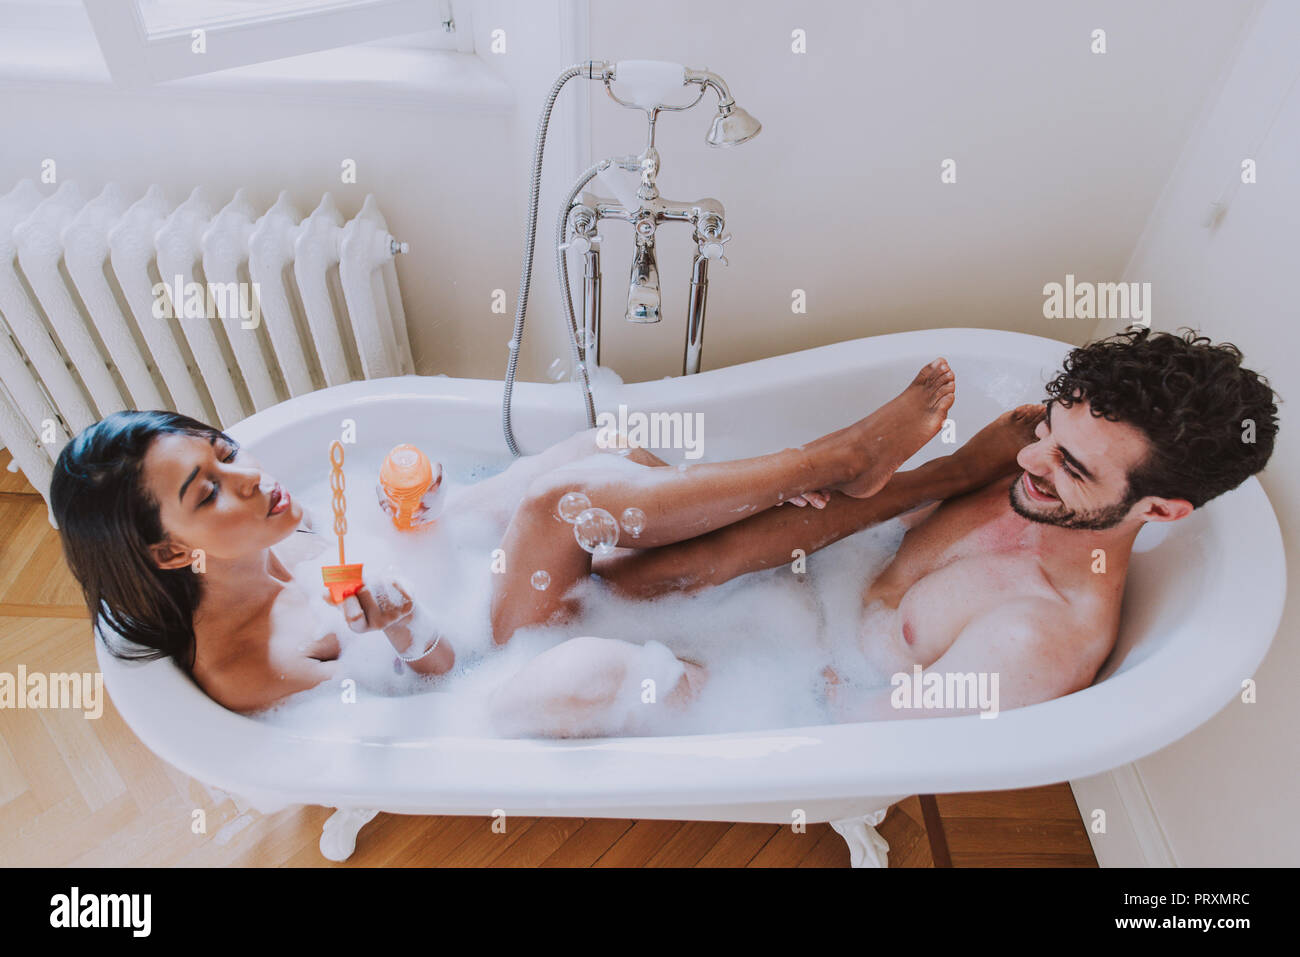 Romantic bath turns into